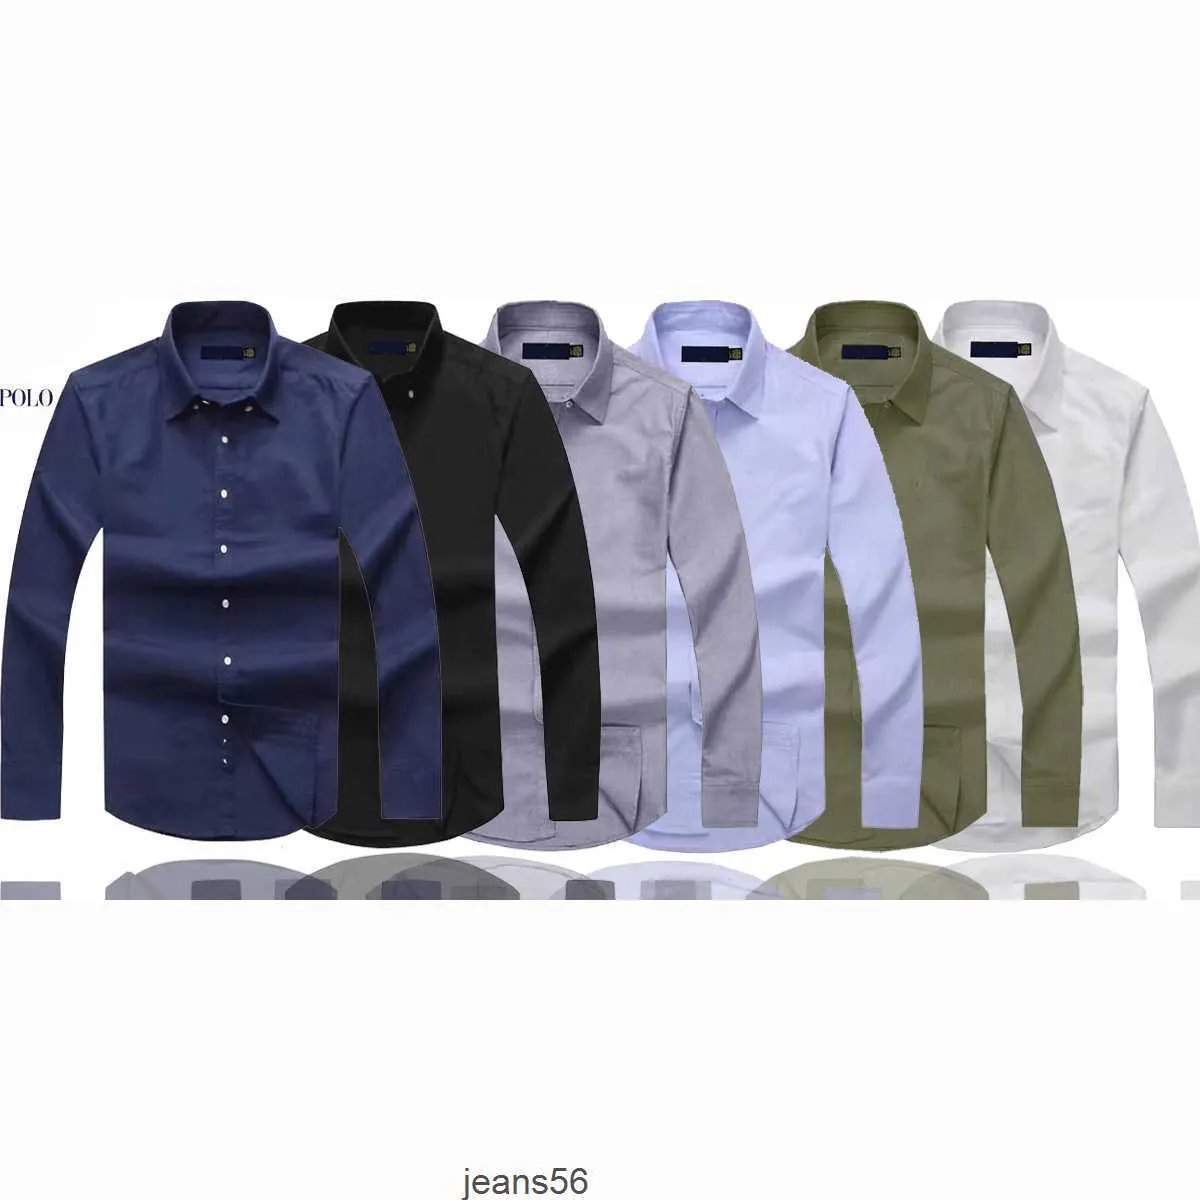 mens polo shirt long sleeve Casual Solid shirt American style Polos Shirts fashion Oxford social shirts best